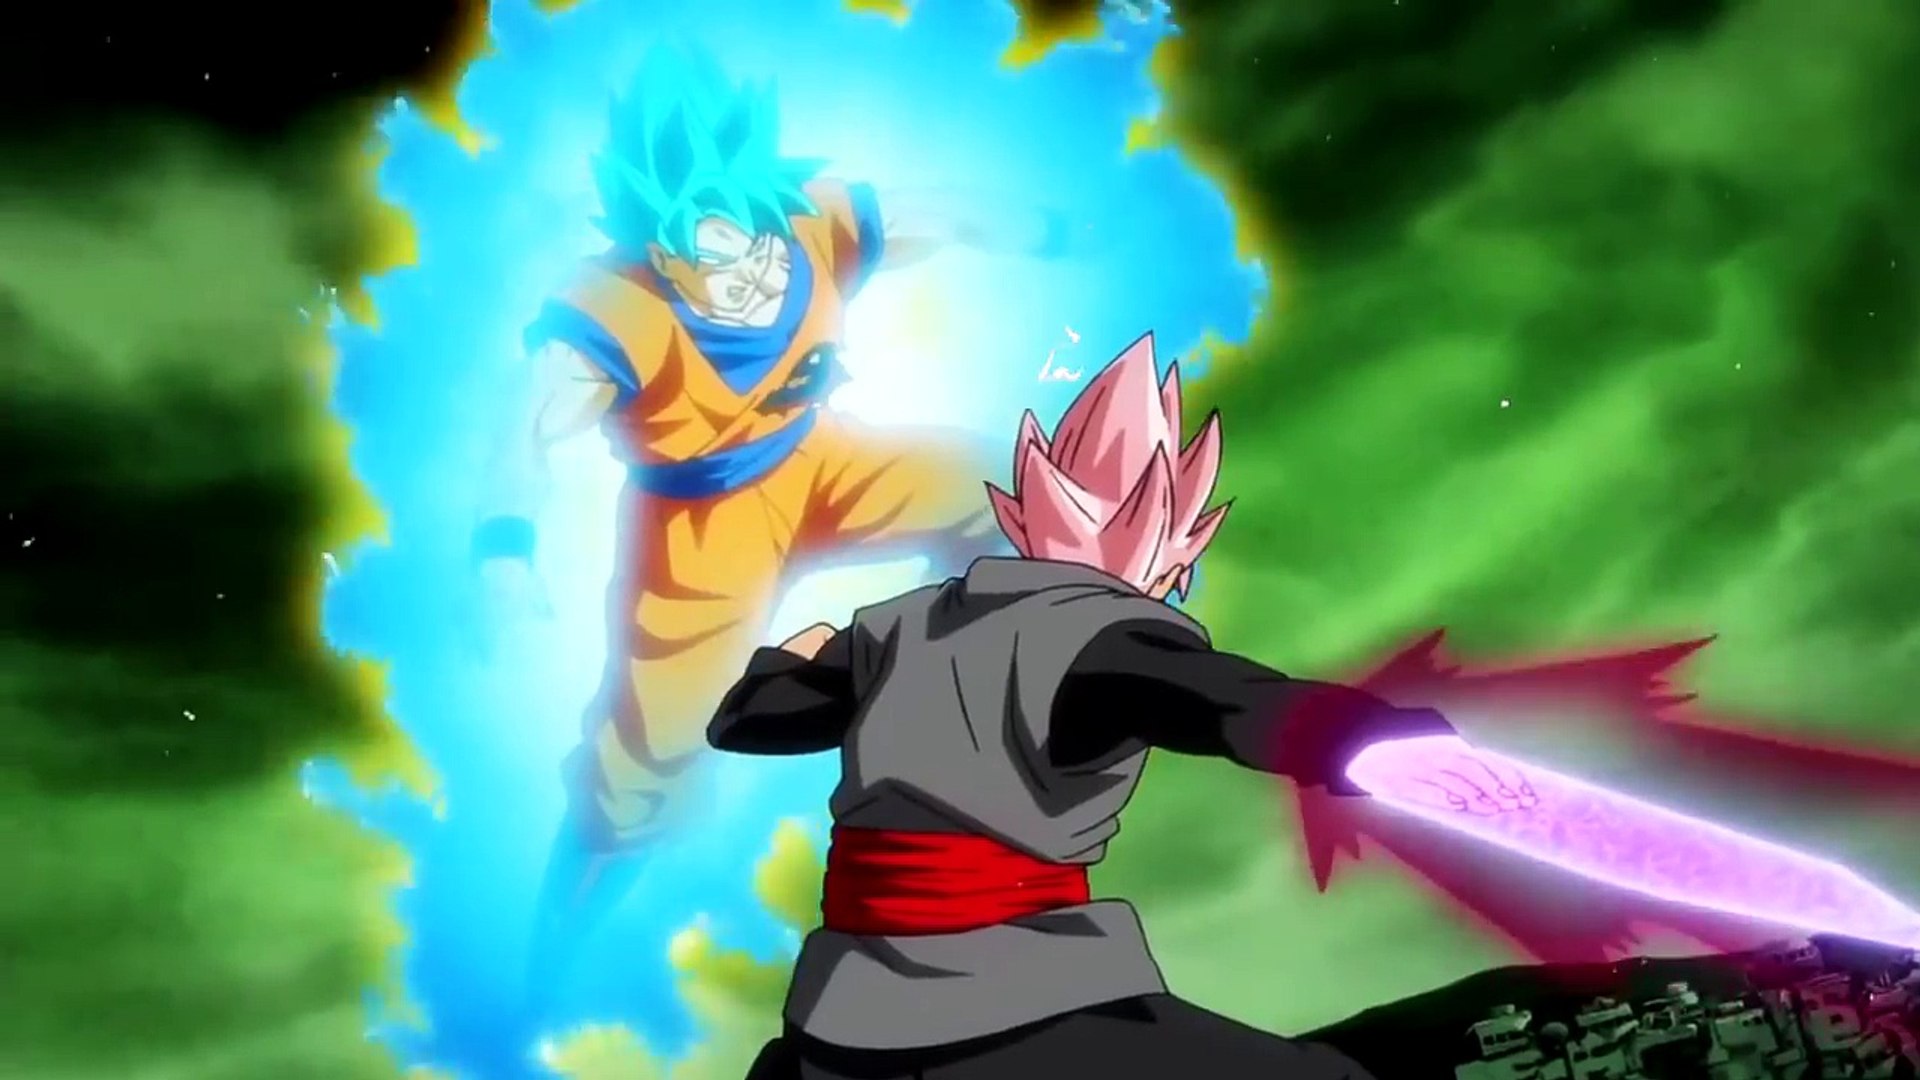 Dragon Ball Super「AMV」 - Goku VS Black Goku And Zamasu - My Fight